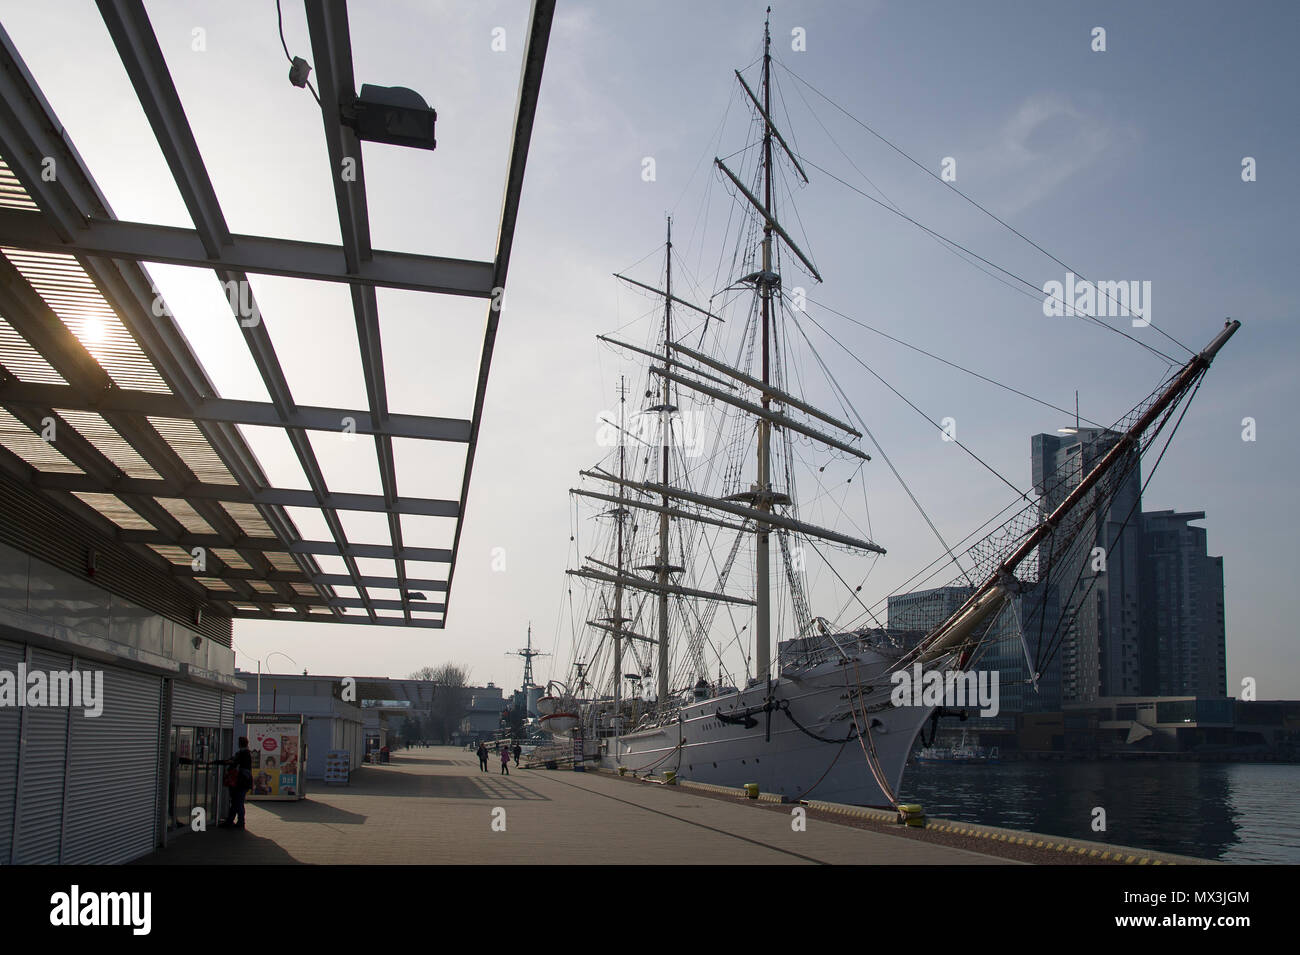 Museum ship Dar Pomorza a Polish full-rigged sailing ship in Gdynia, Poland. May 12th 2018 © Wojciech Strozyk / Alamy Stock Photo Stock Photo